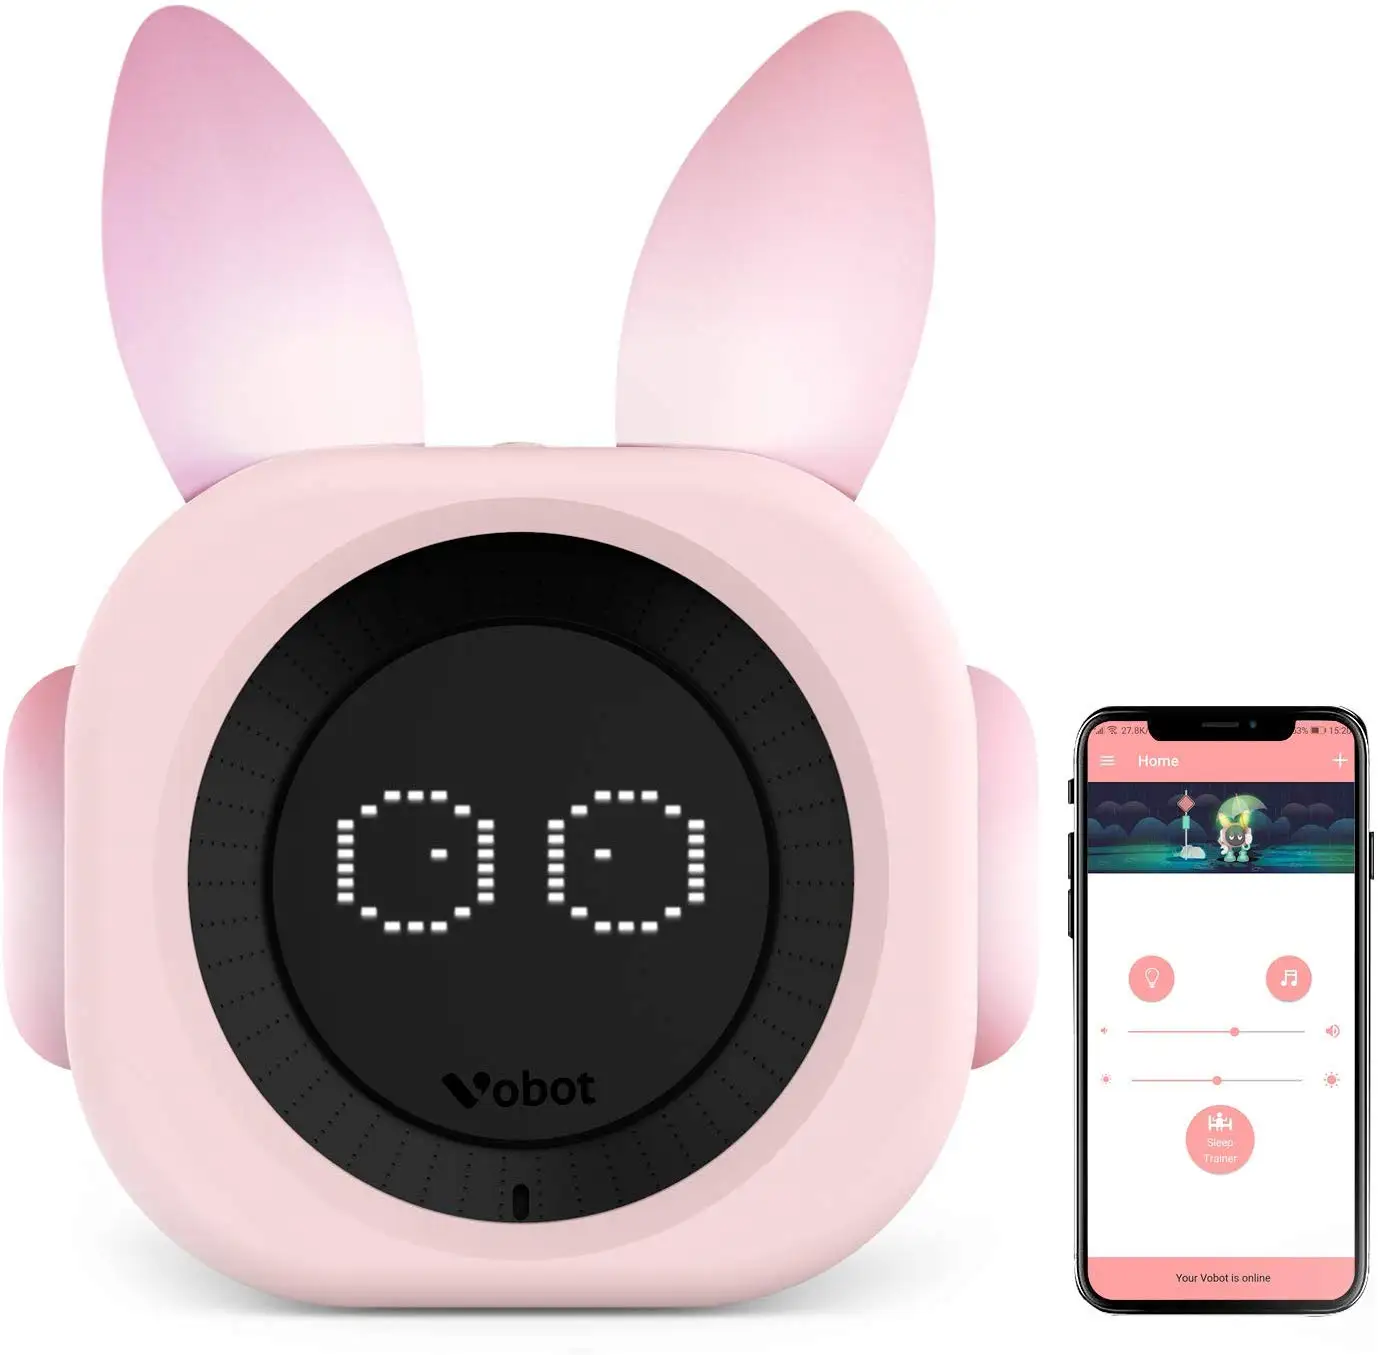 

VOBOT Bunny Kids Alarm Clock, Smart Alarm Clock With Night Lights, Customized color